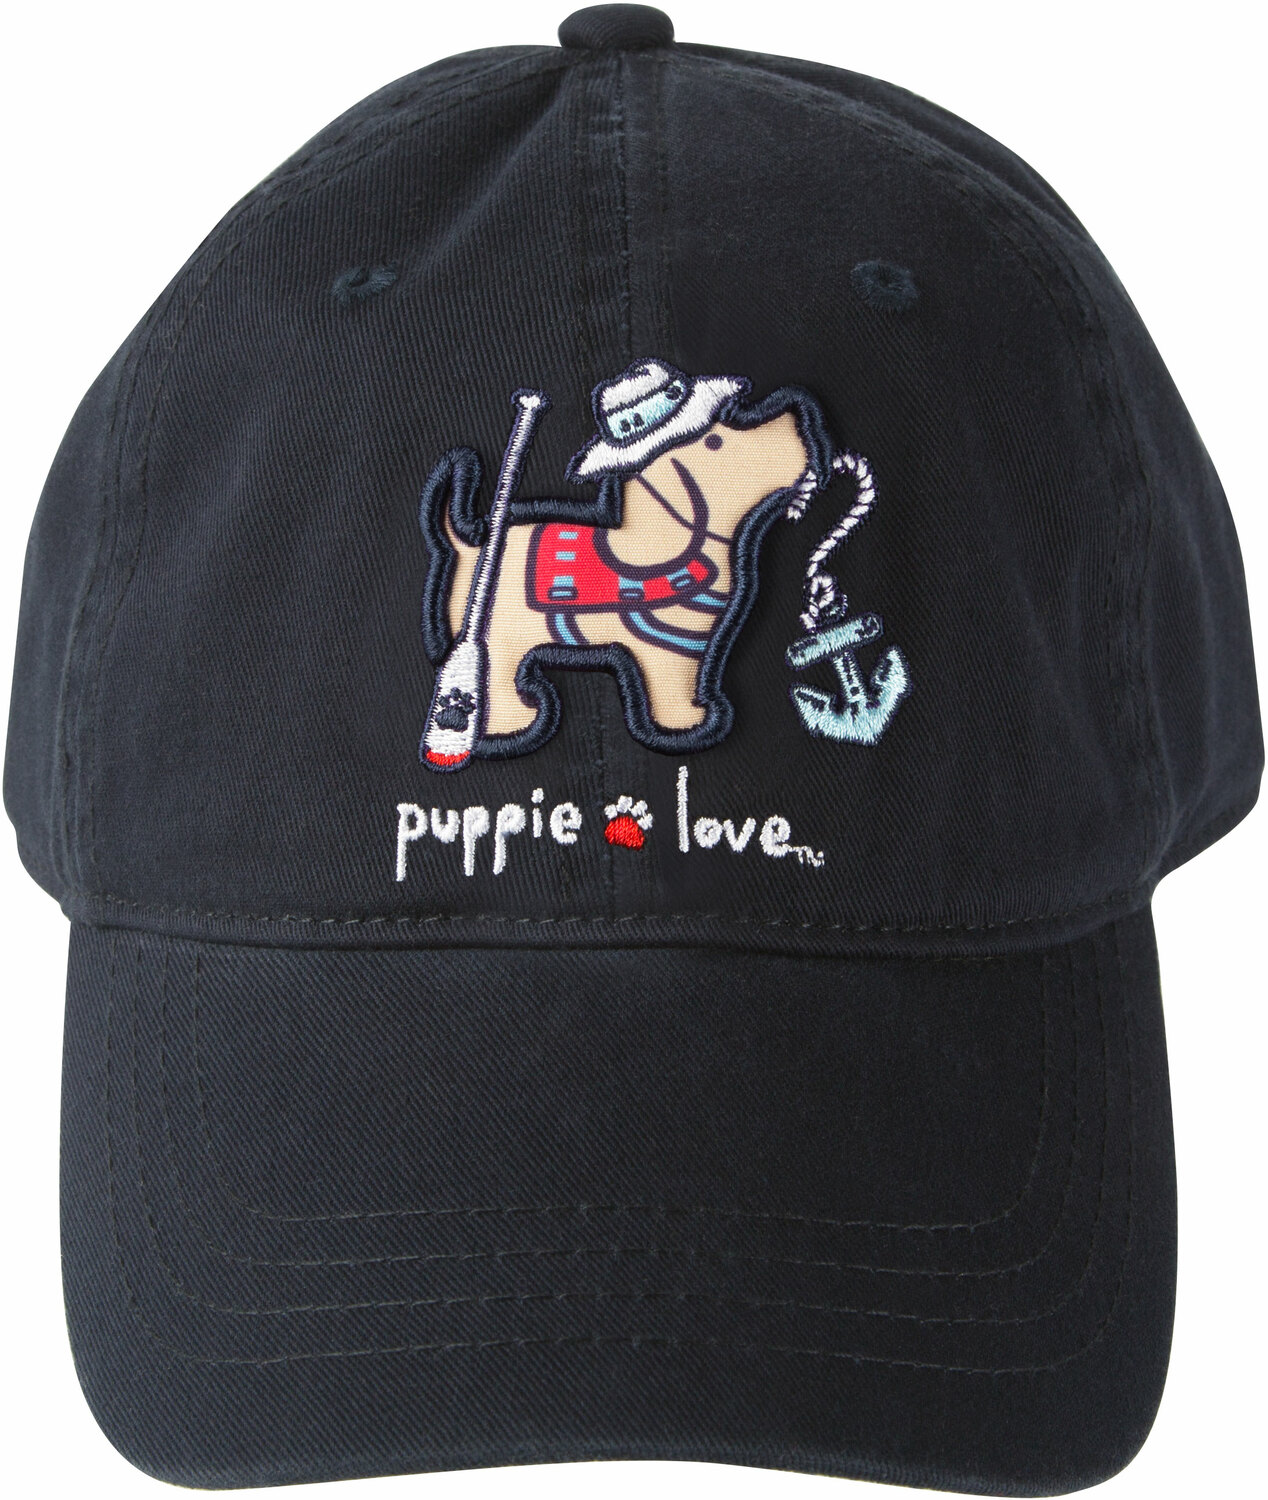 Lake by Puppie Love - Lake - Navy Adjustable Hat